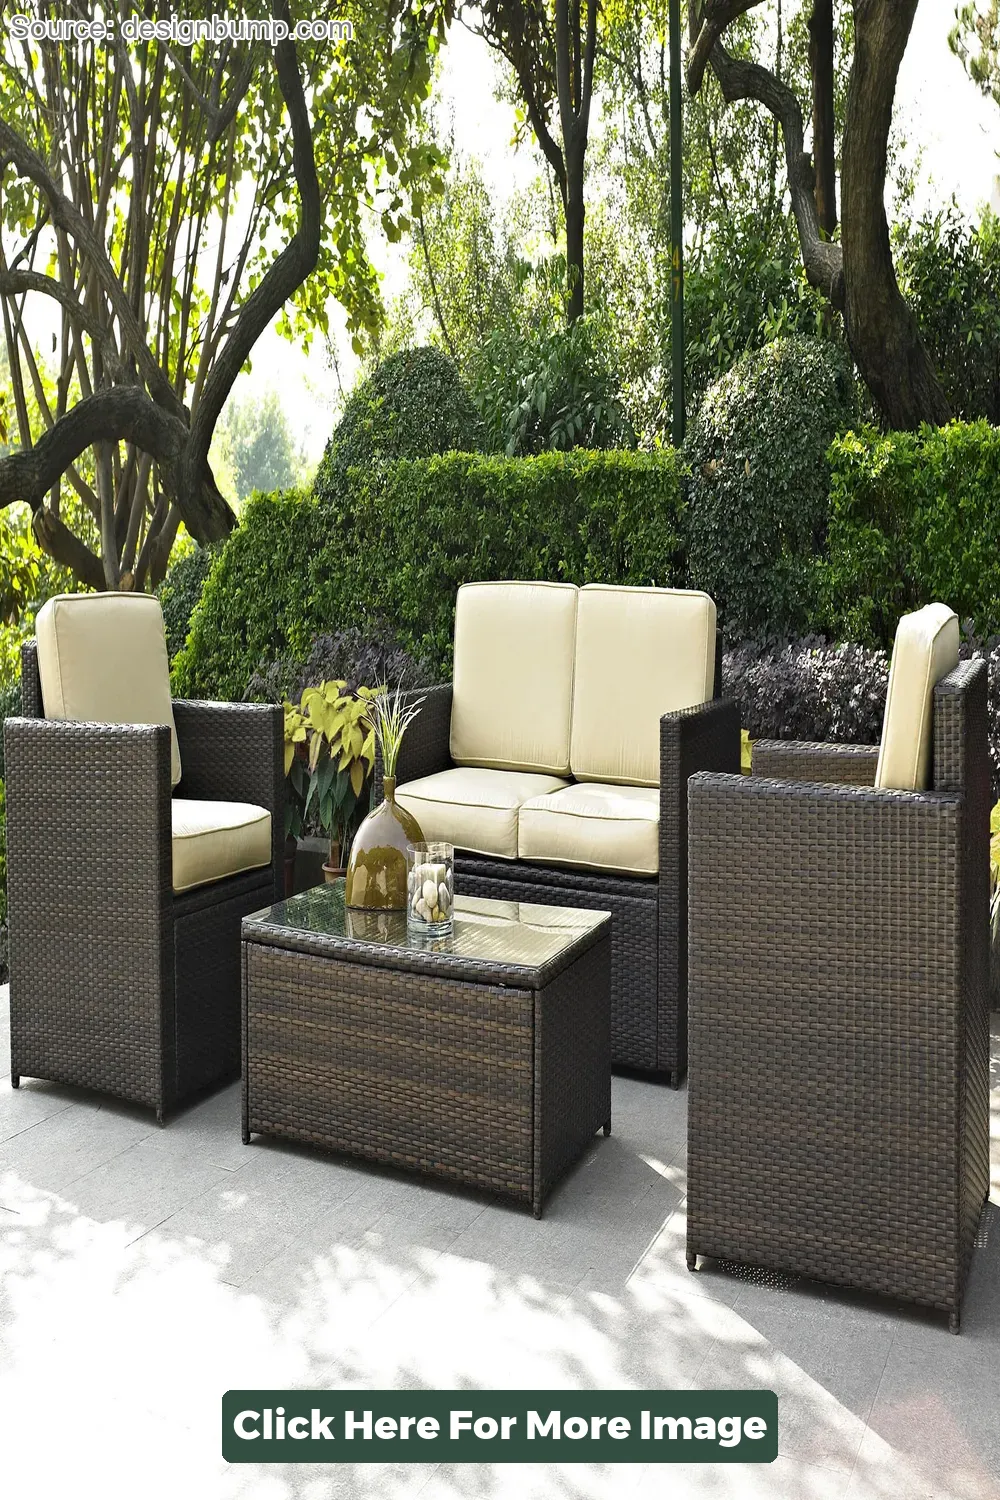 Top 50 Outdoor Furniture Design Ideas